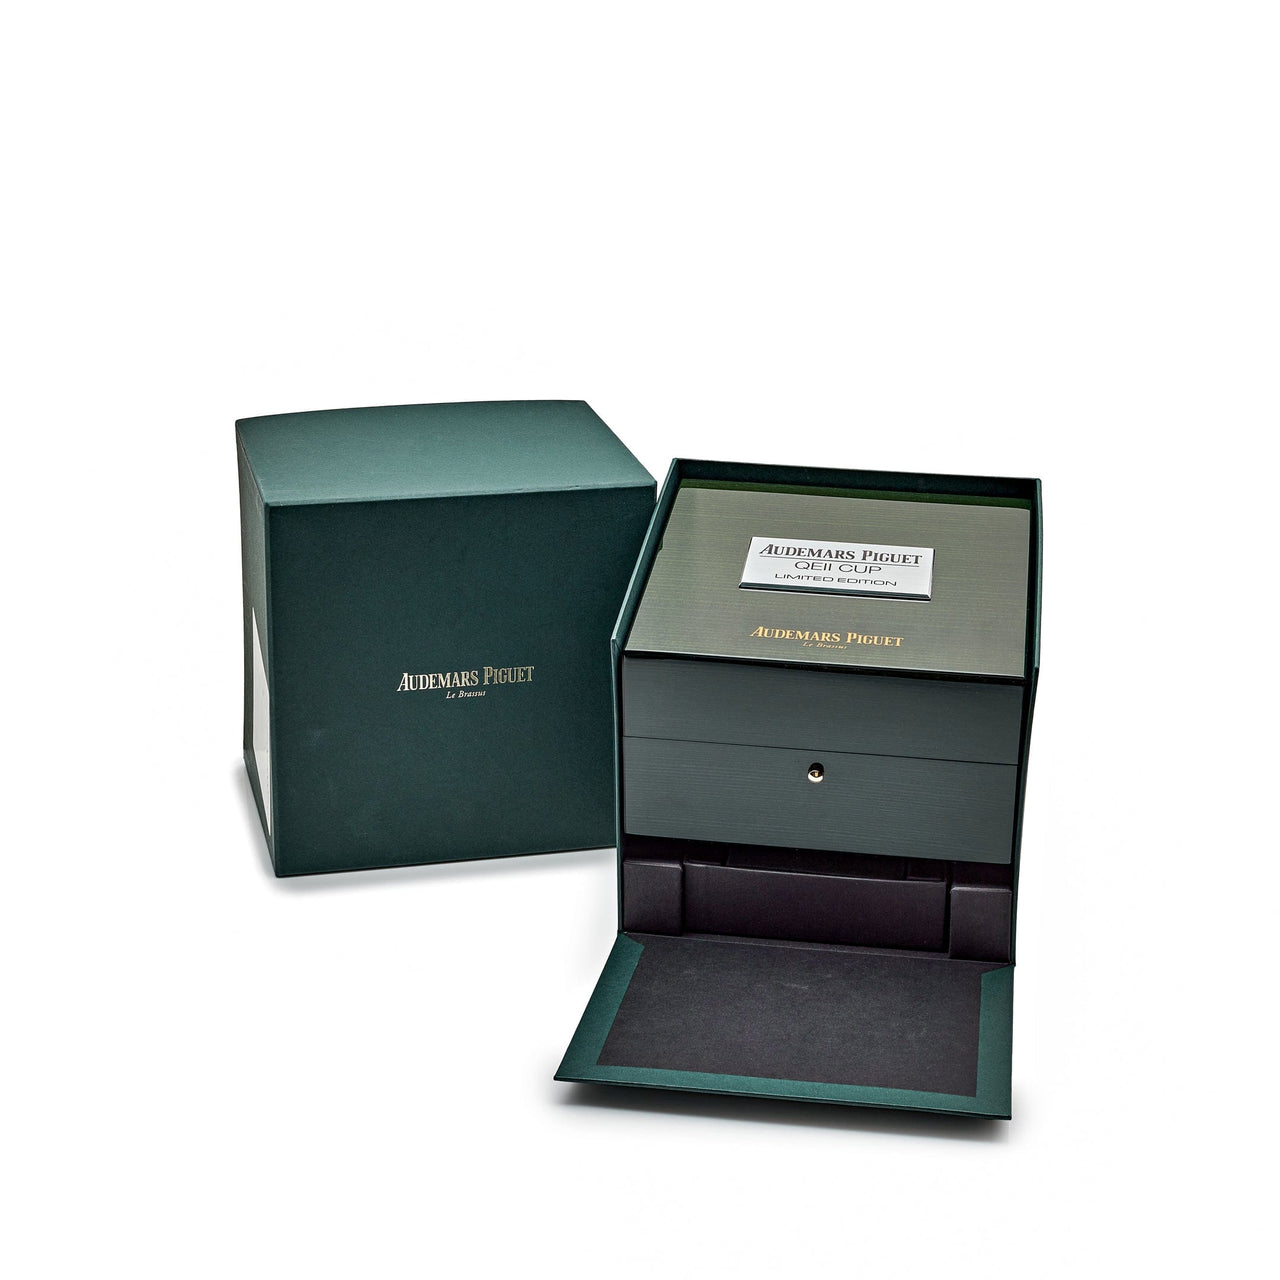 Audemars Piguet Royal Oak Offshore 26474TI.OO.1000TI.01 Chronograph 'QEII Cup' Titanium Grey Dial Limited Edition (2019)